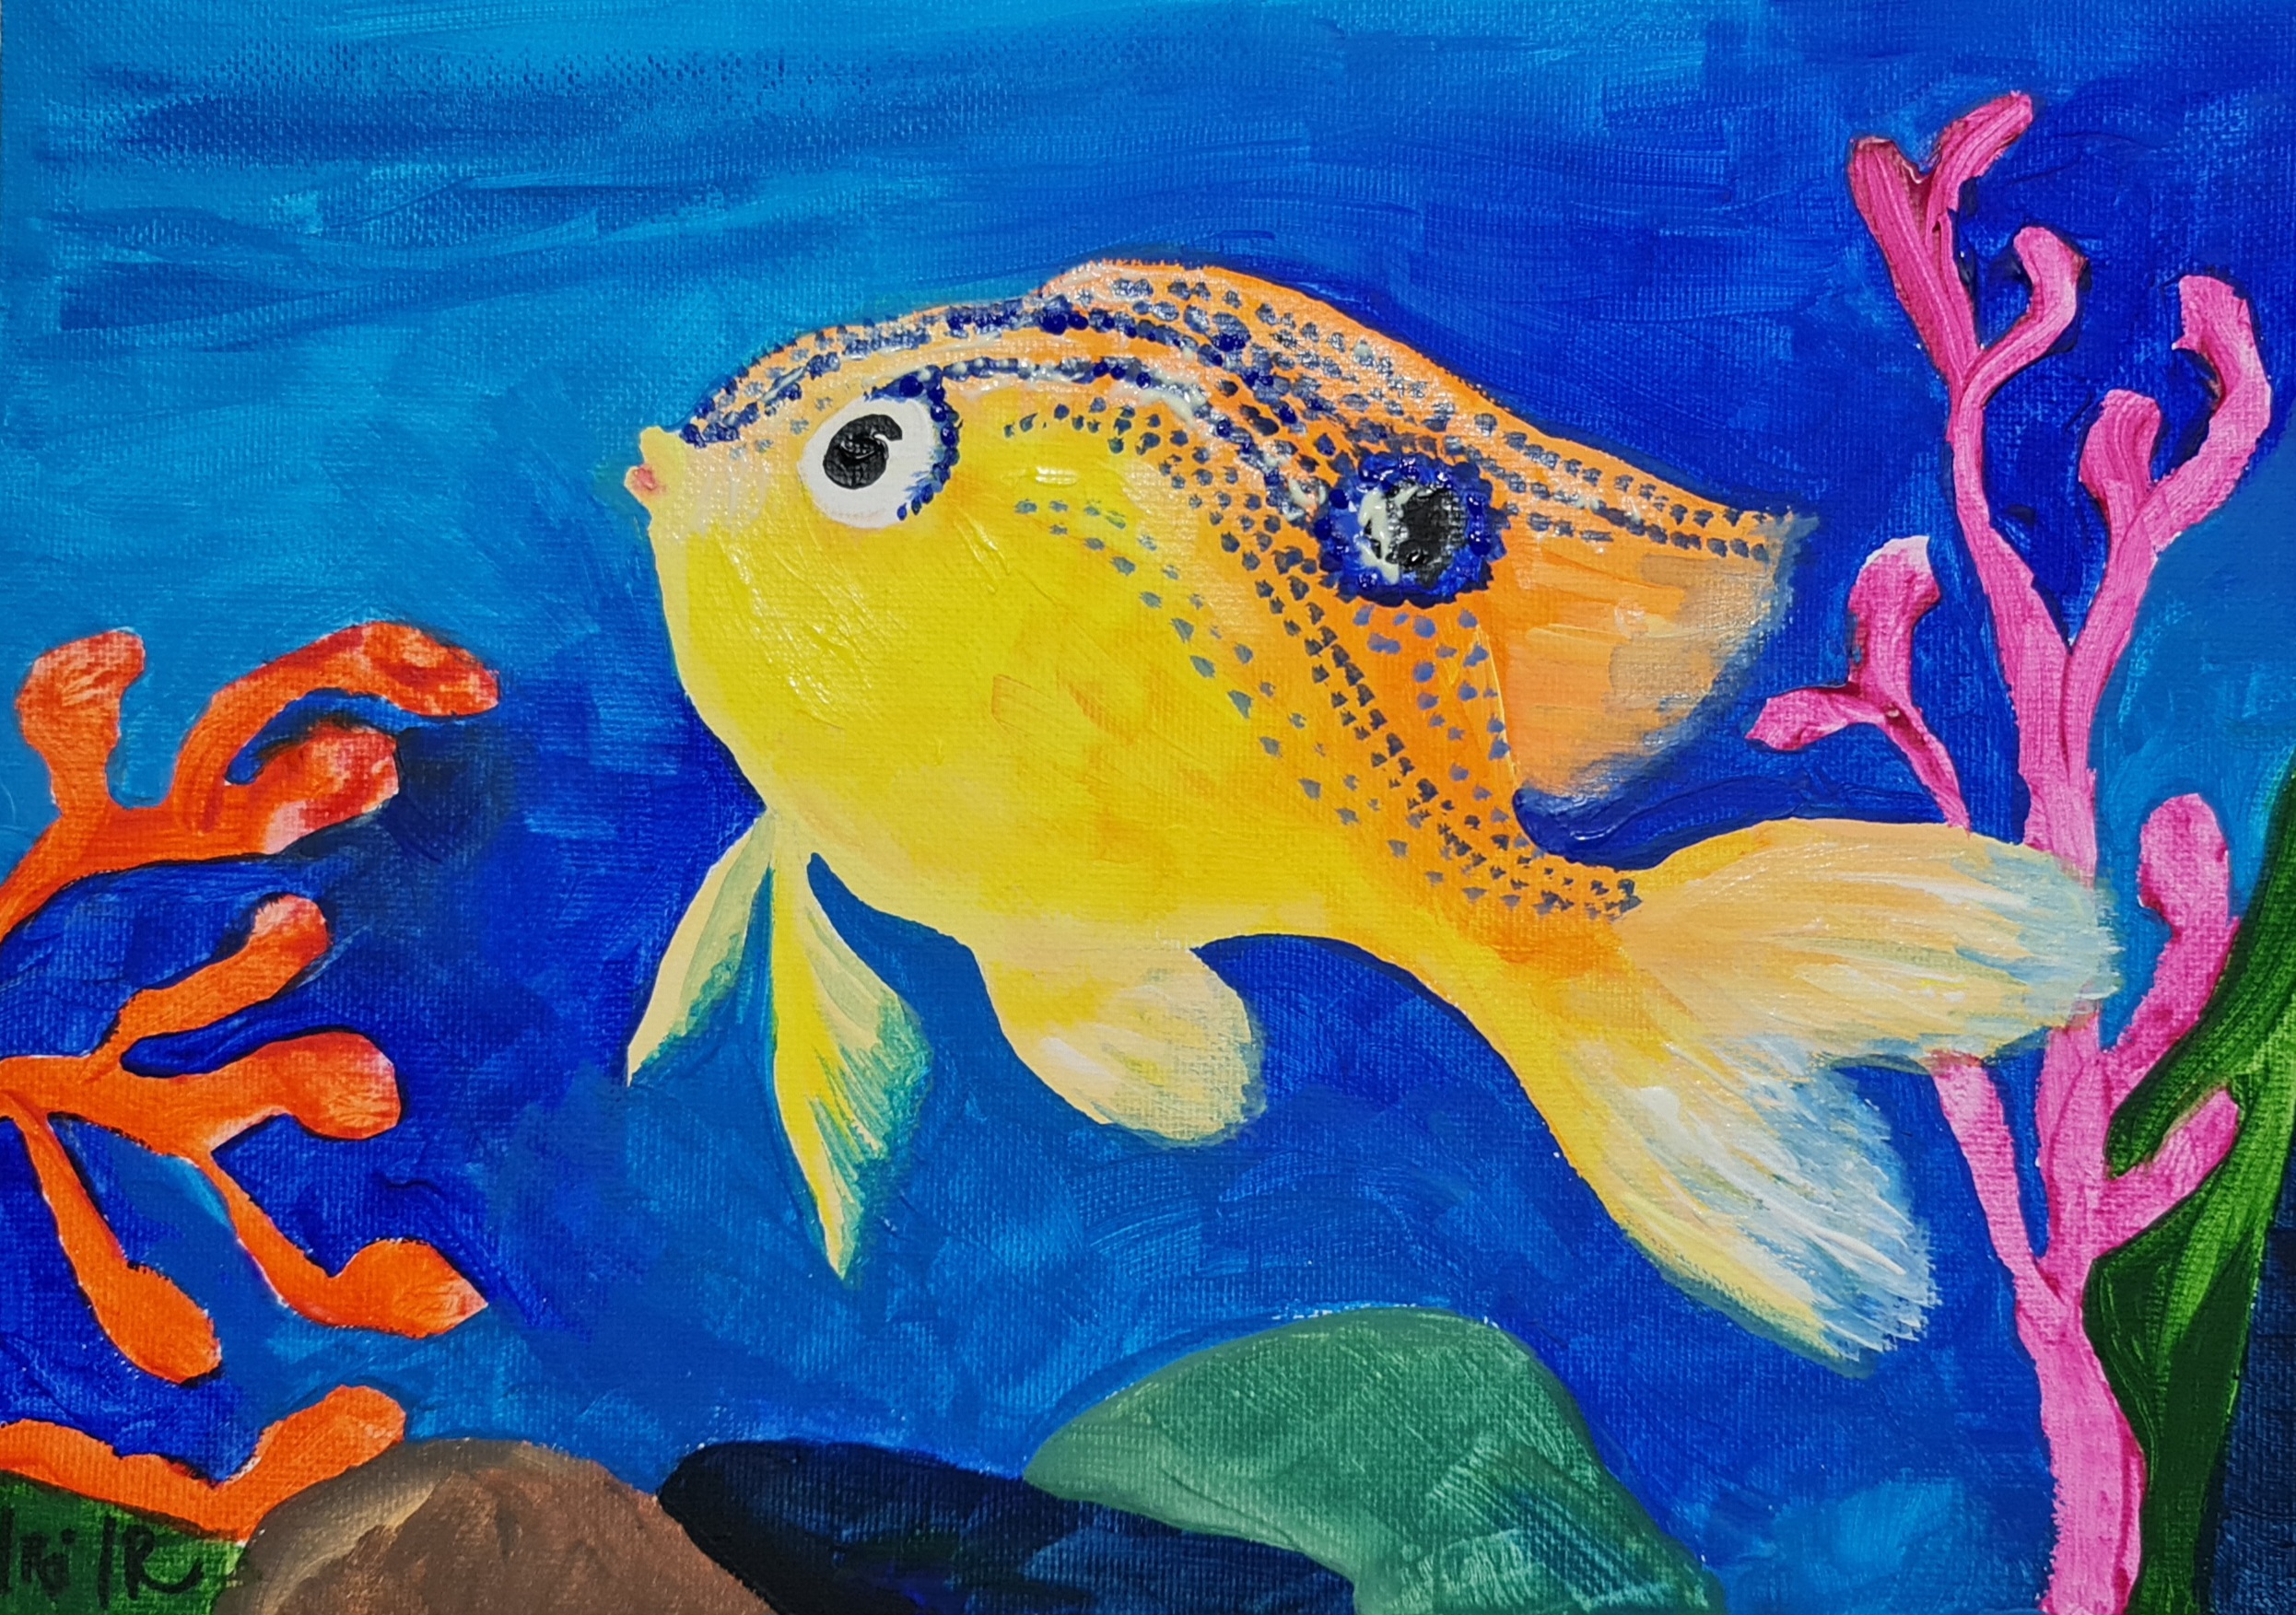 gold fish painting party family event irina taneva artist tutor art workshop 